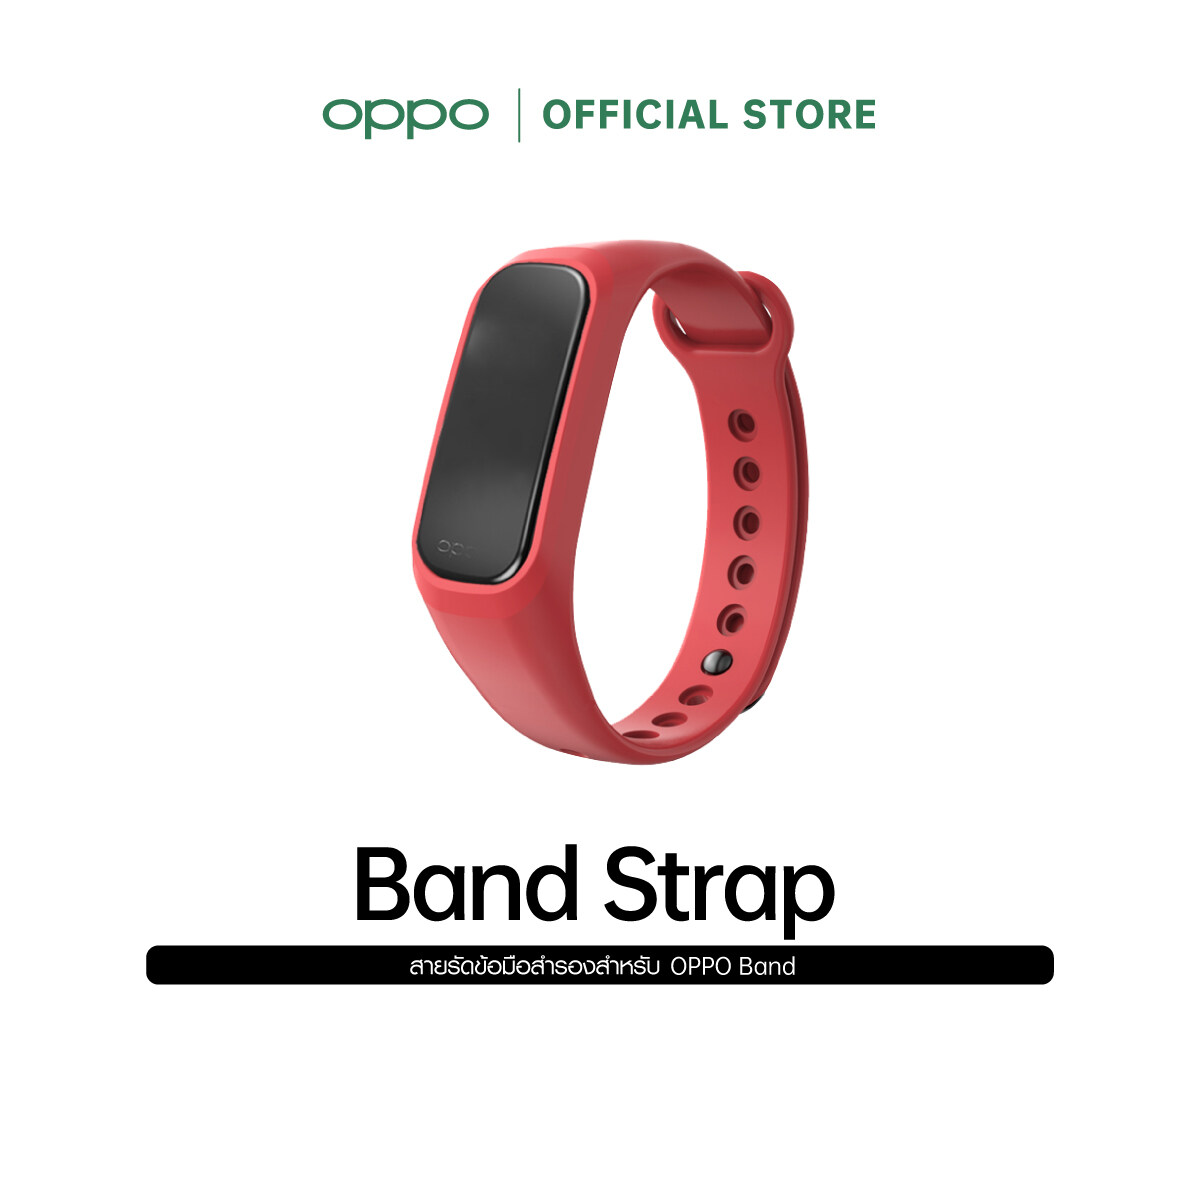 Band Strap สายรัดข้อมือสำรองสำหรับ OPPO Band *เฉพาะสายเท่านั้น*